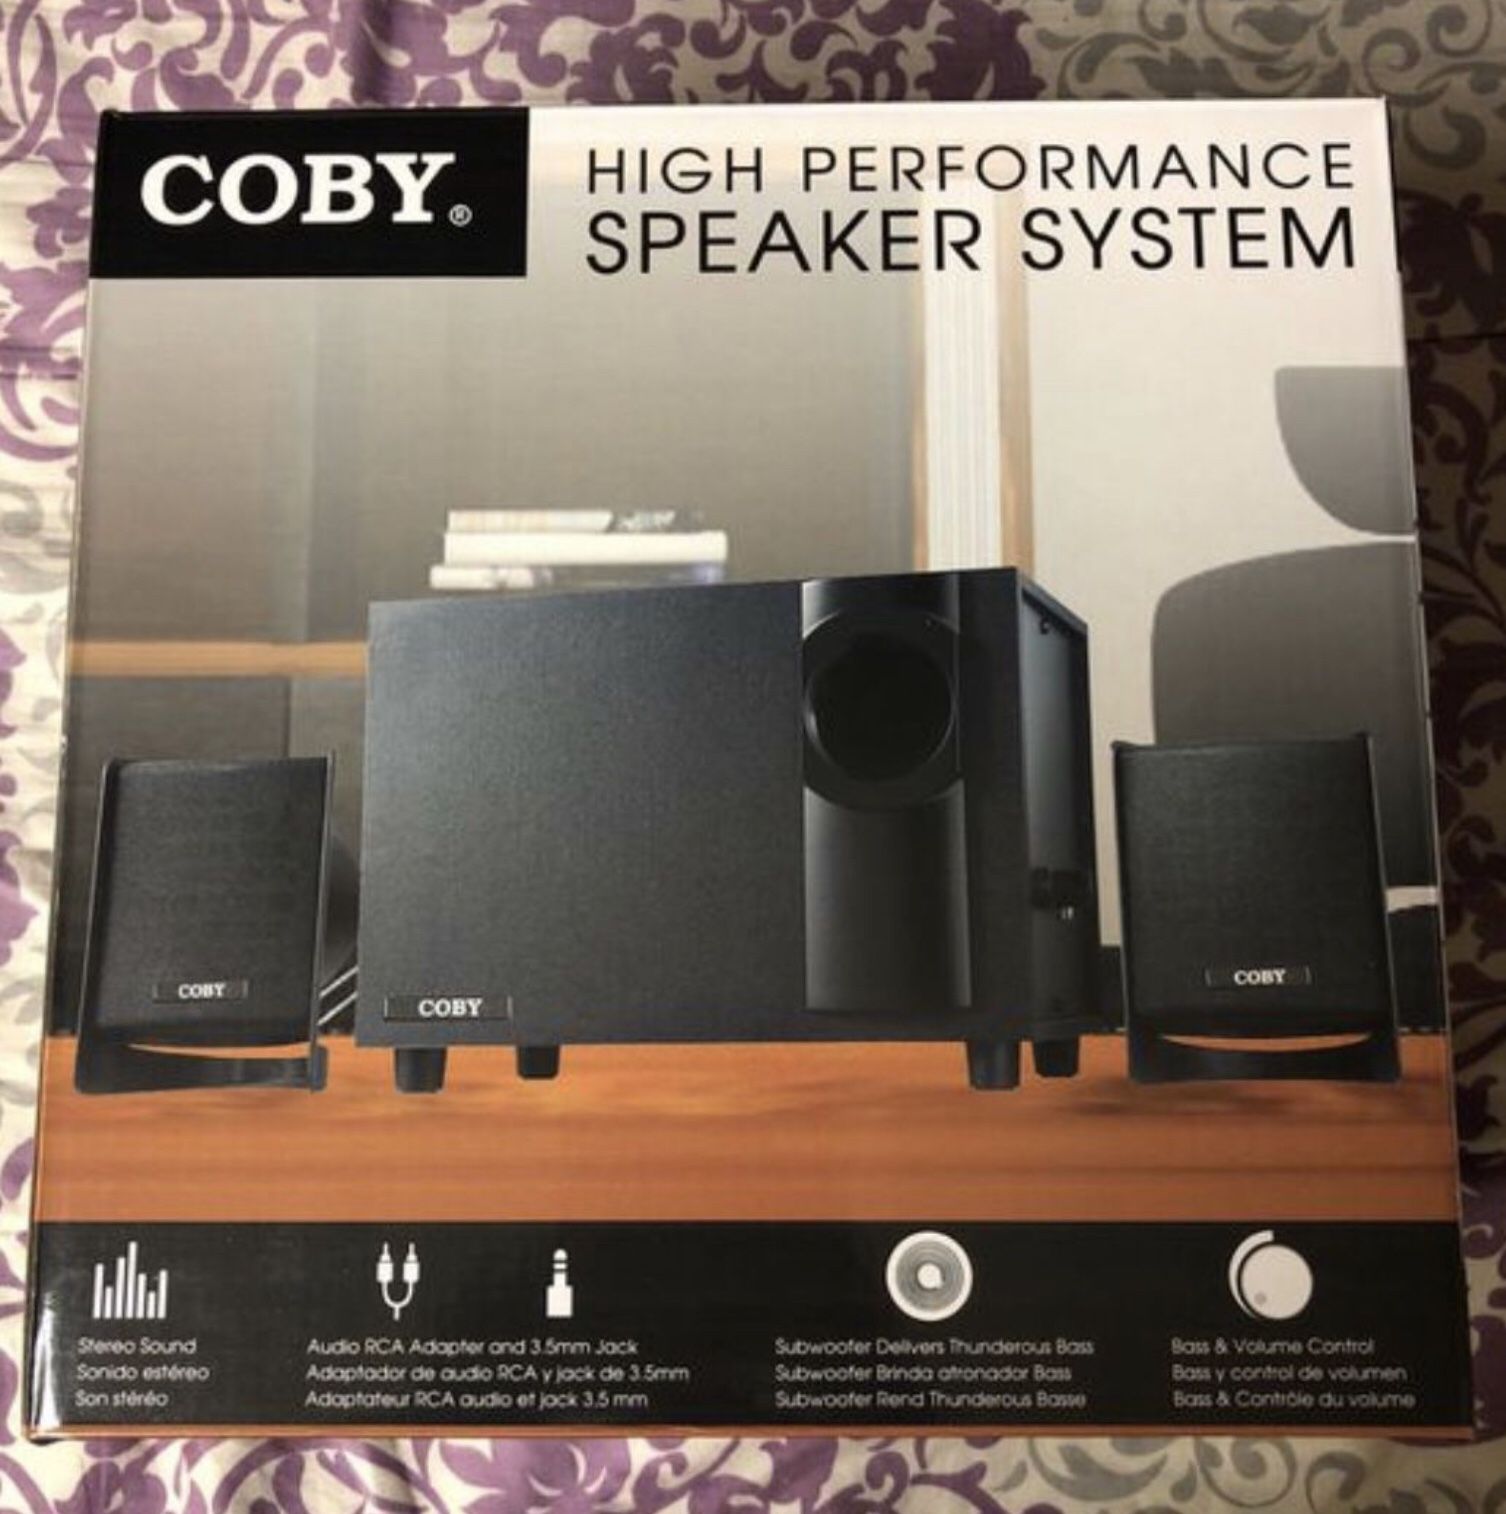 Coby High Performance Speaker